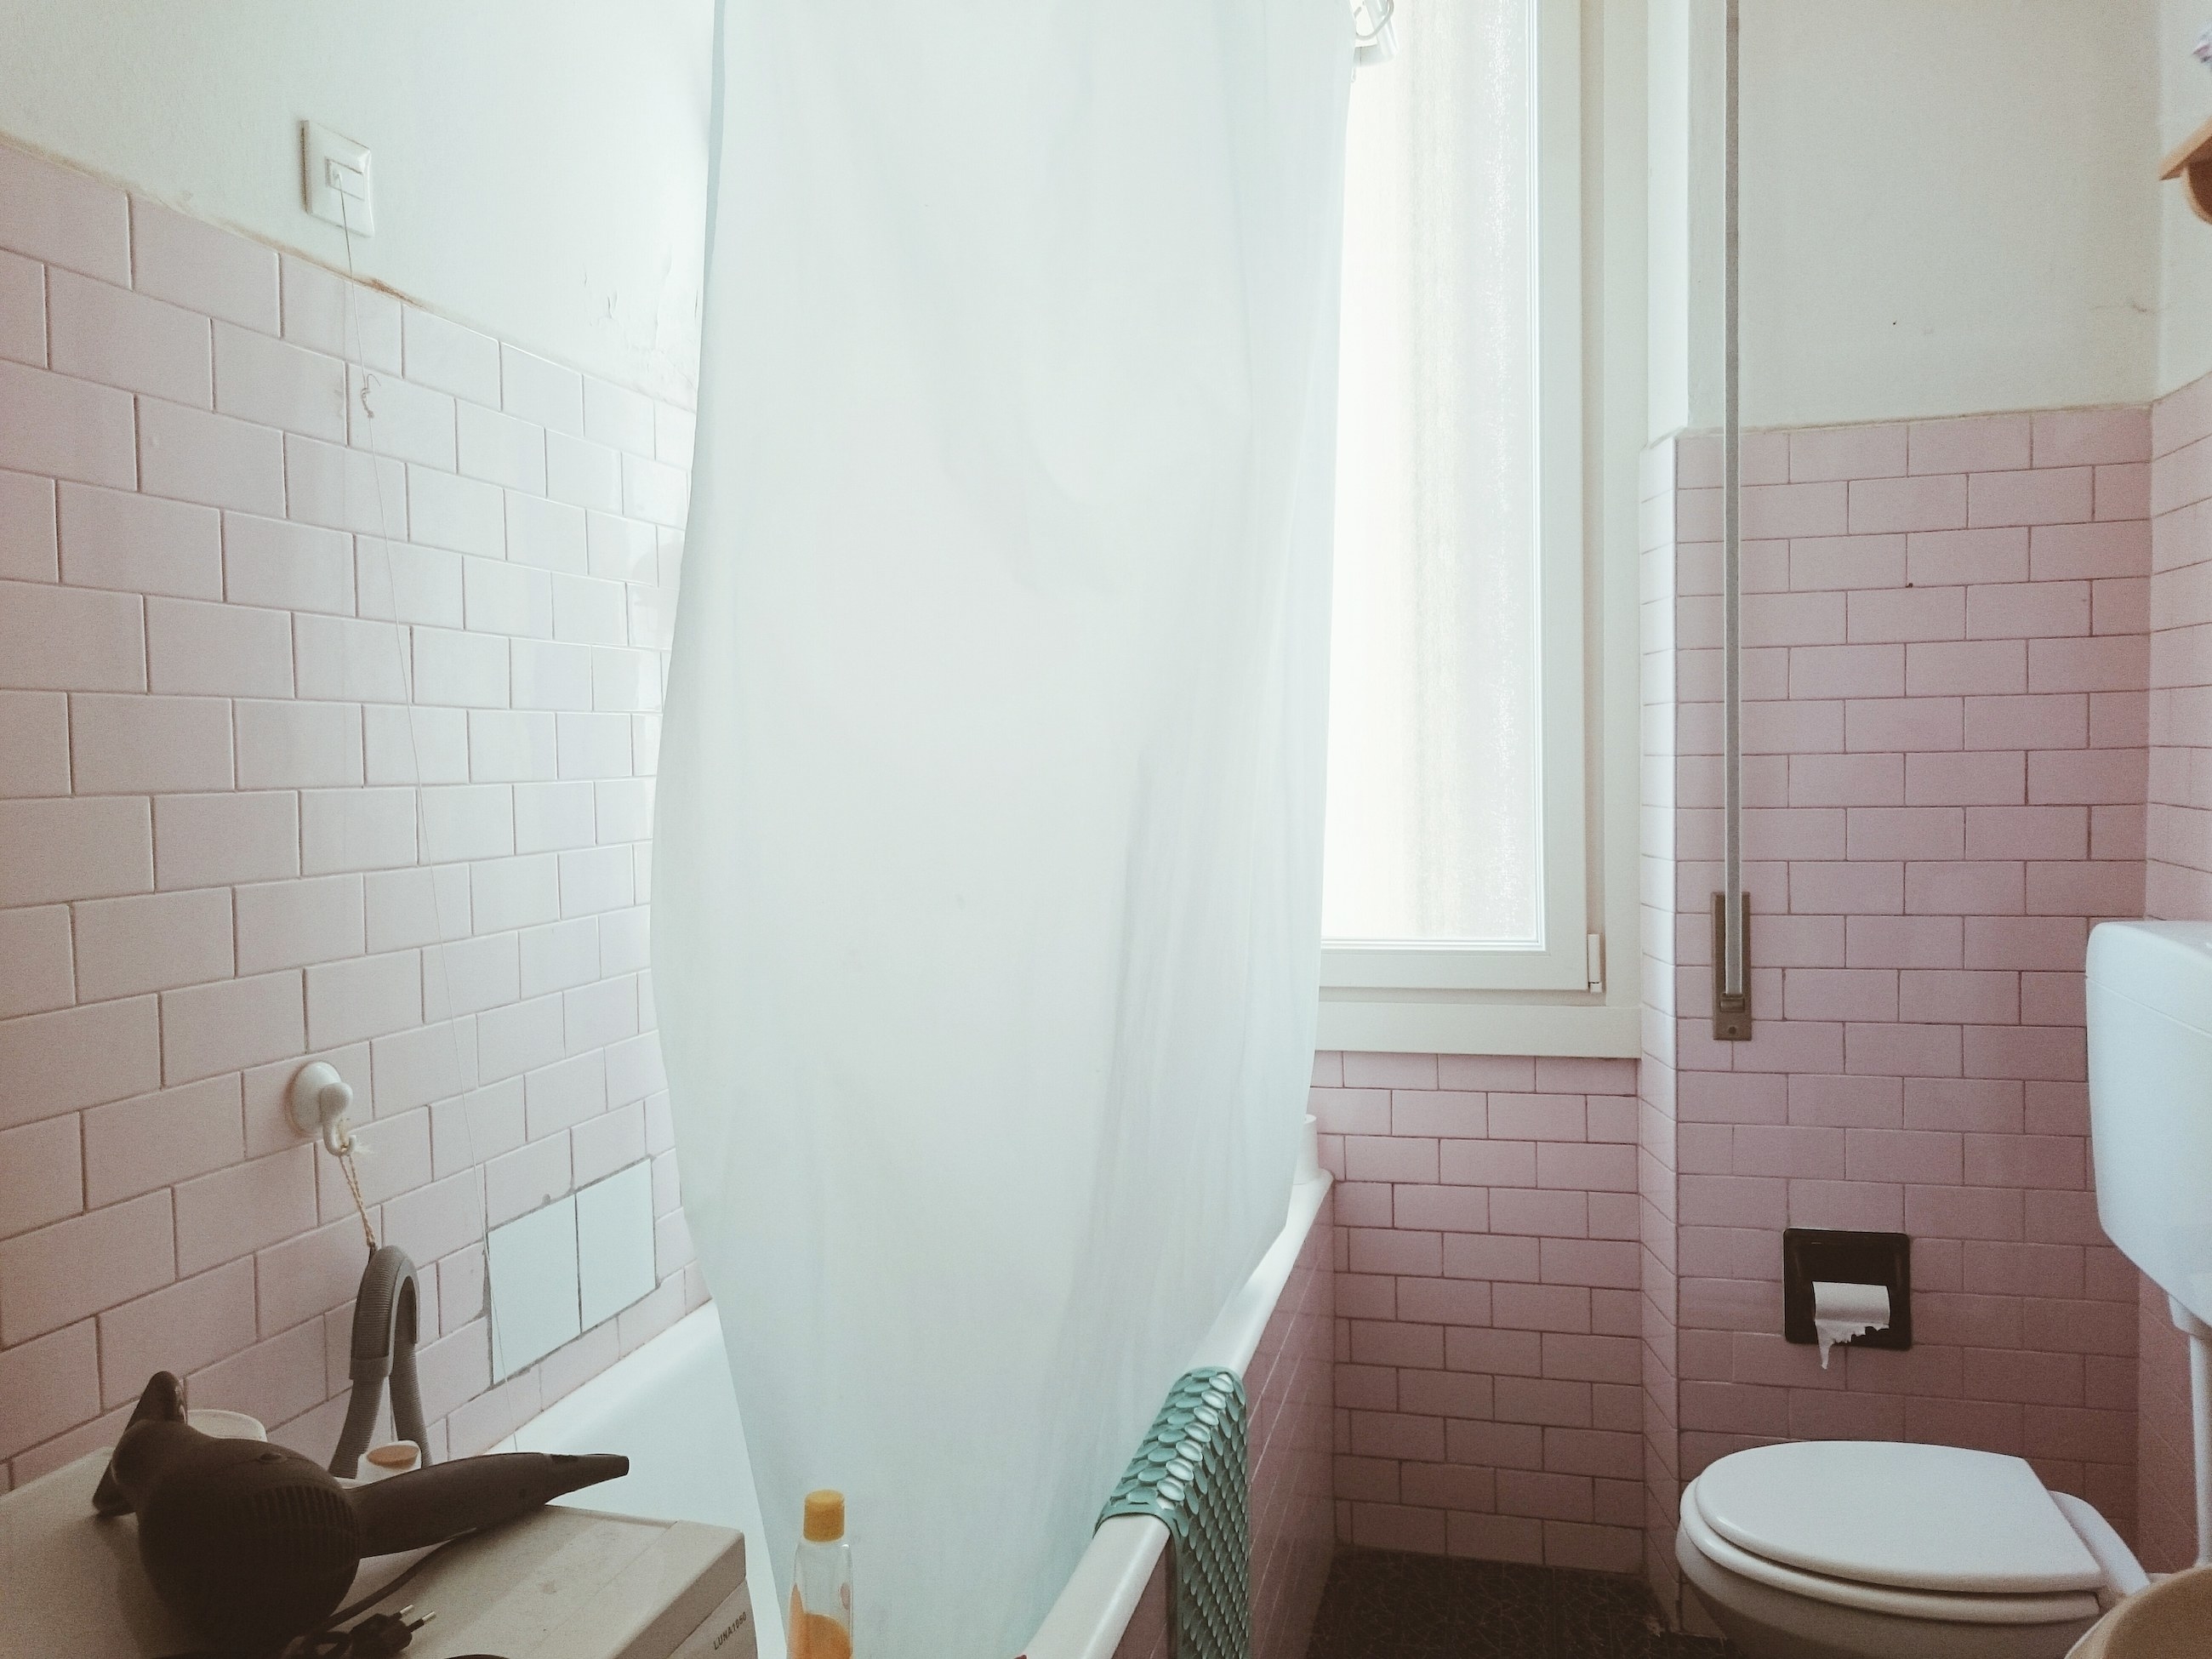 bathroom shower curtain lining the tub